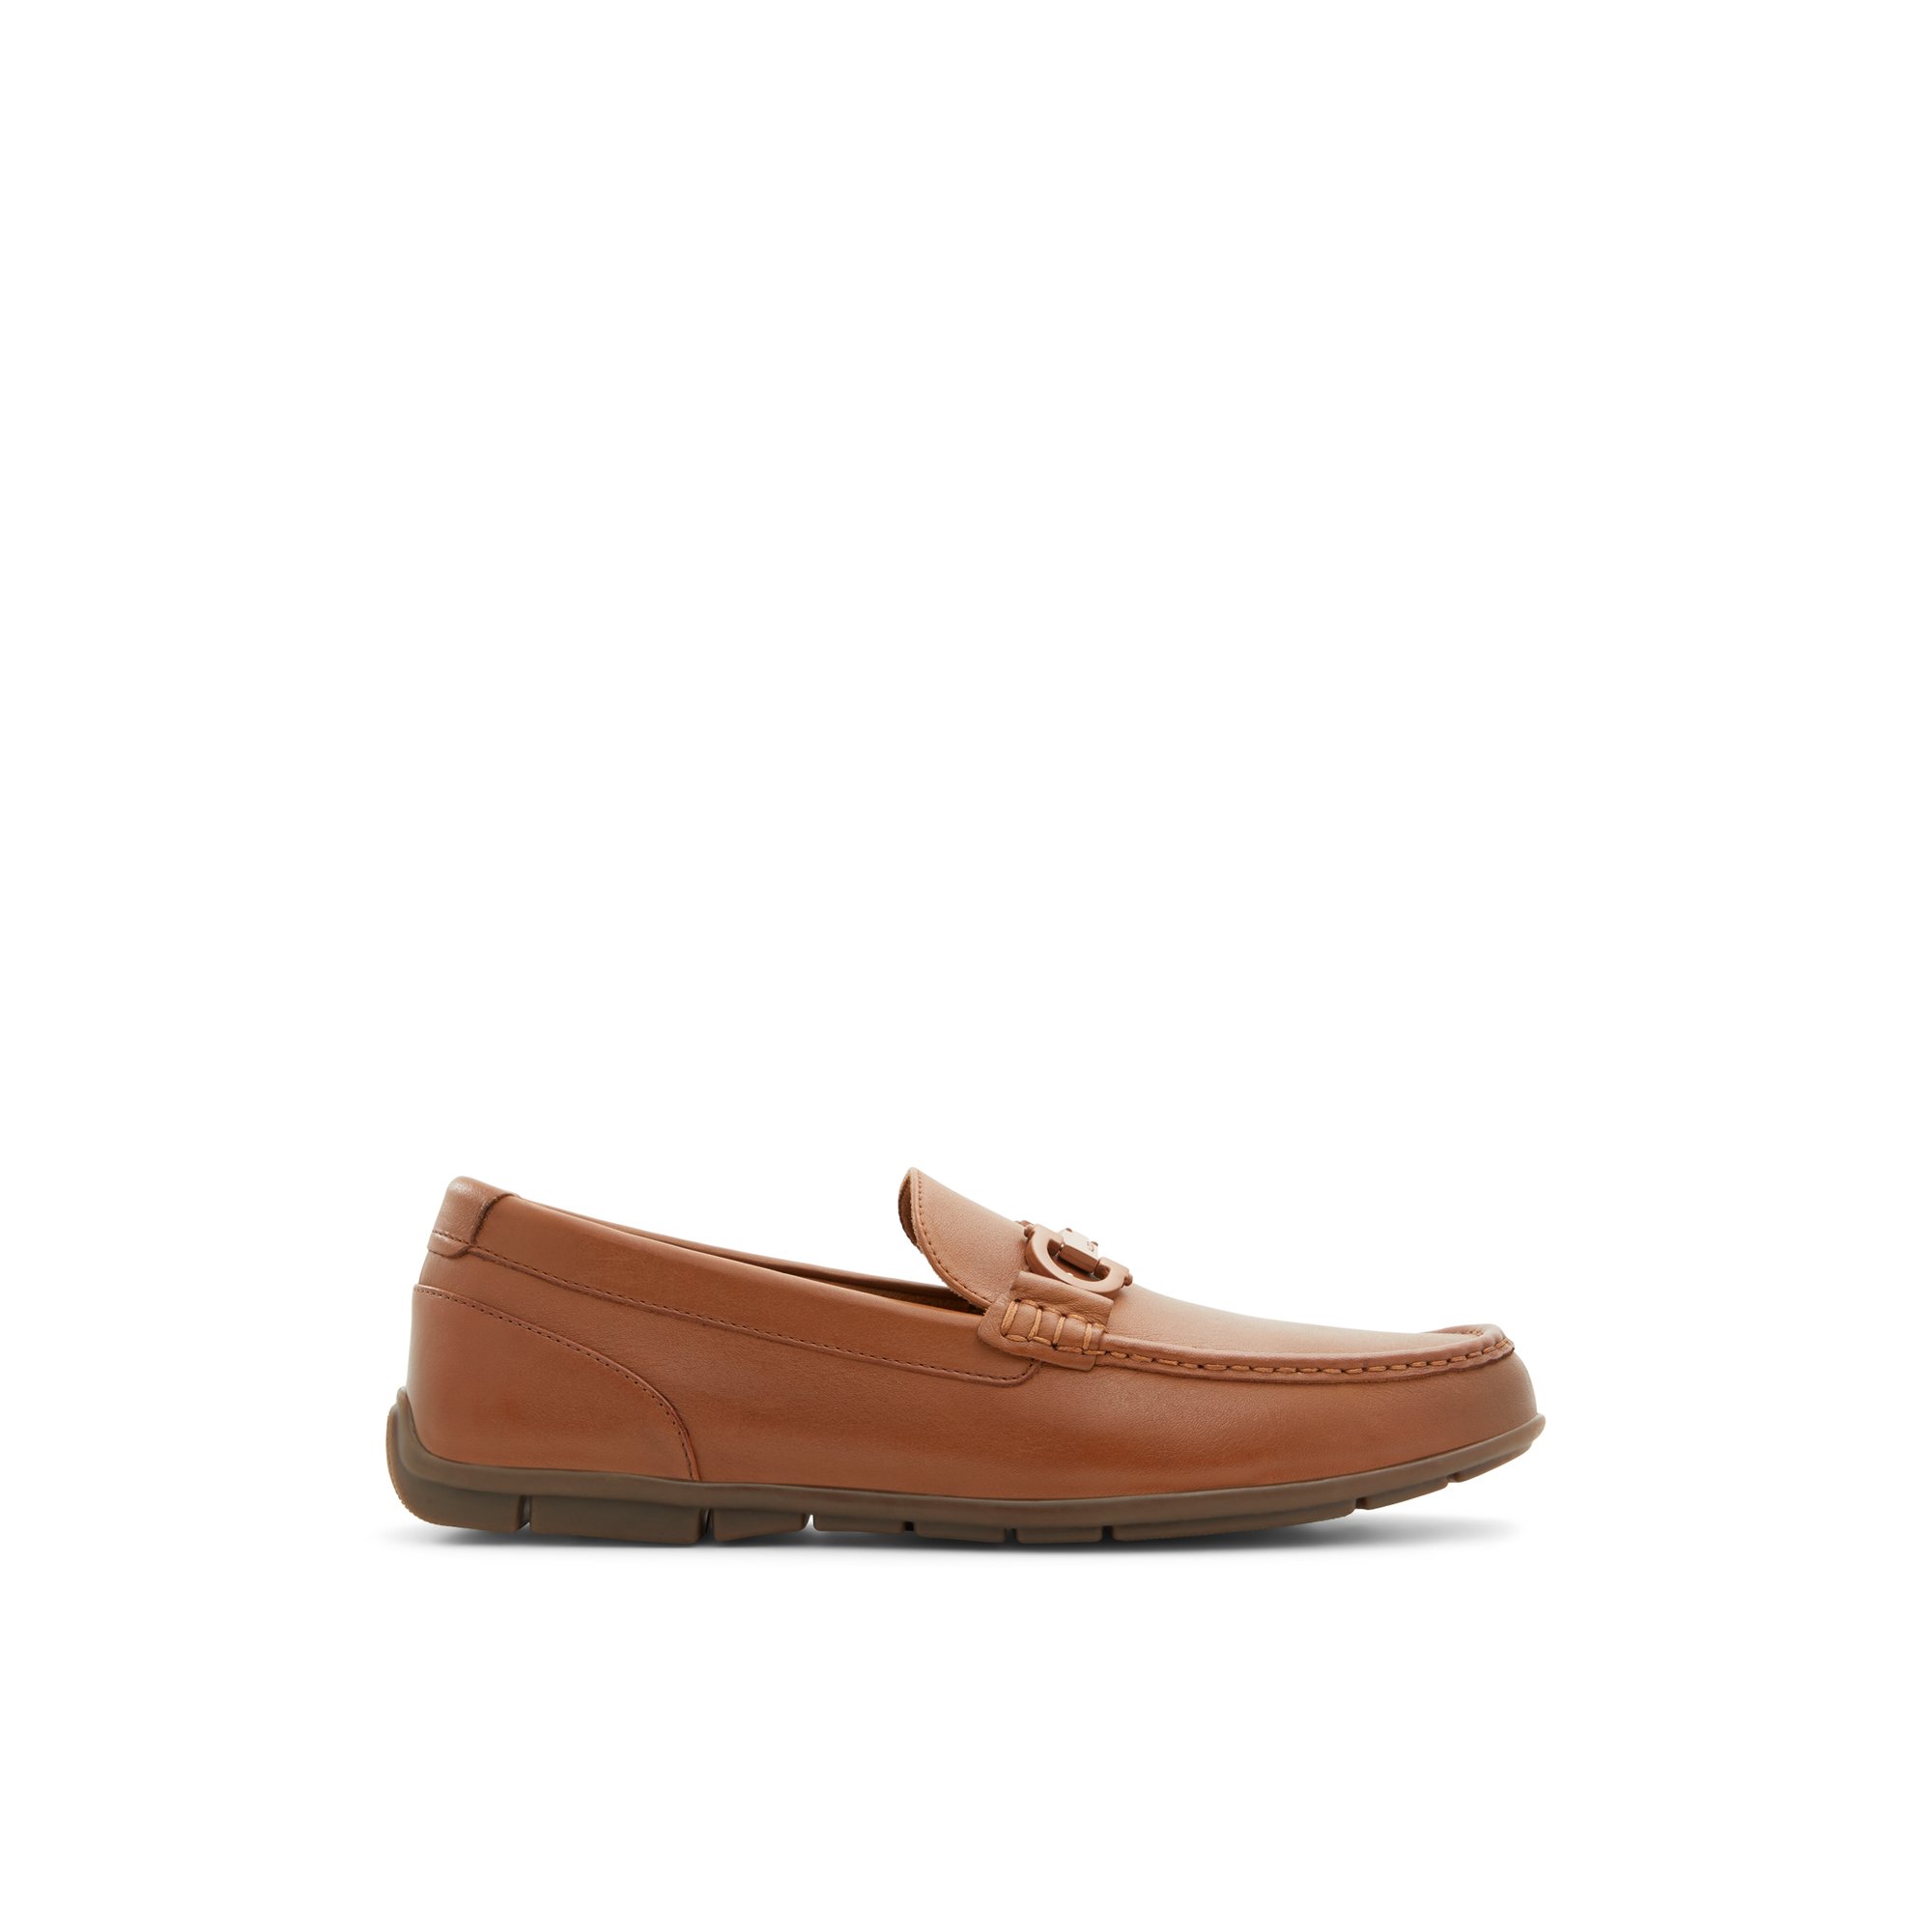 ALDO Orlovoflex - Men's Casual Shoes - Brown